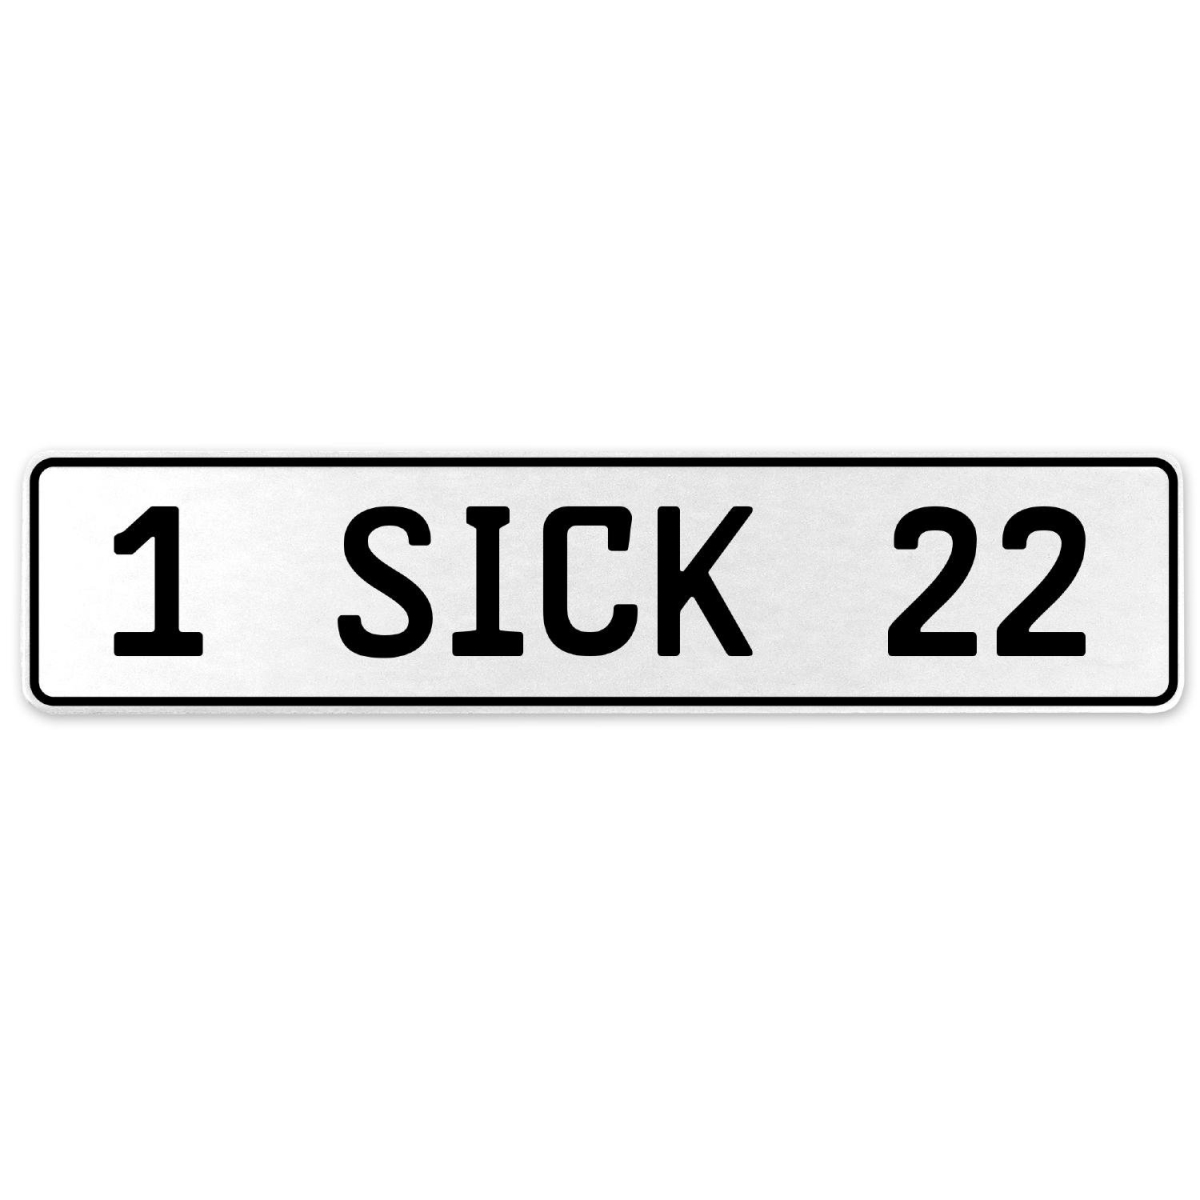 554421 1 Sick 22 - White Aluminum Street Sign Mancave Euro Plate Name Door Sign Wall